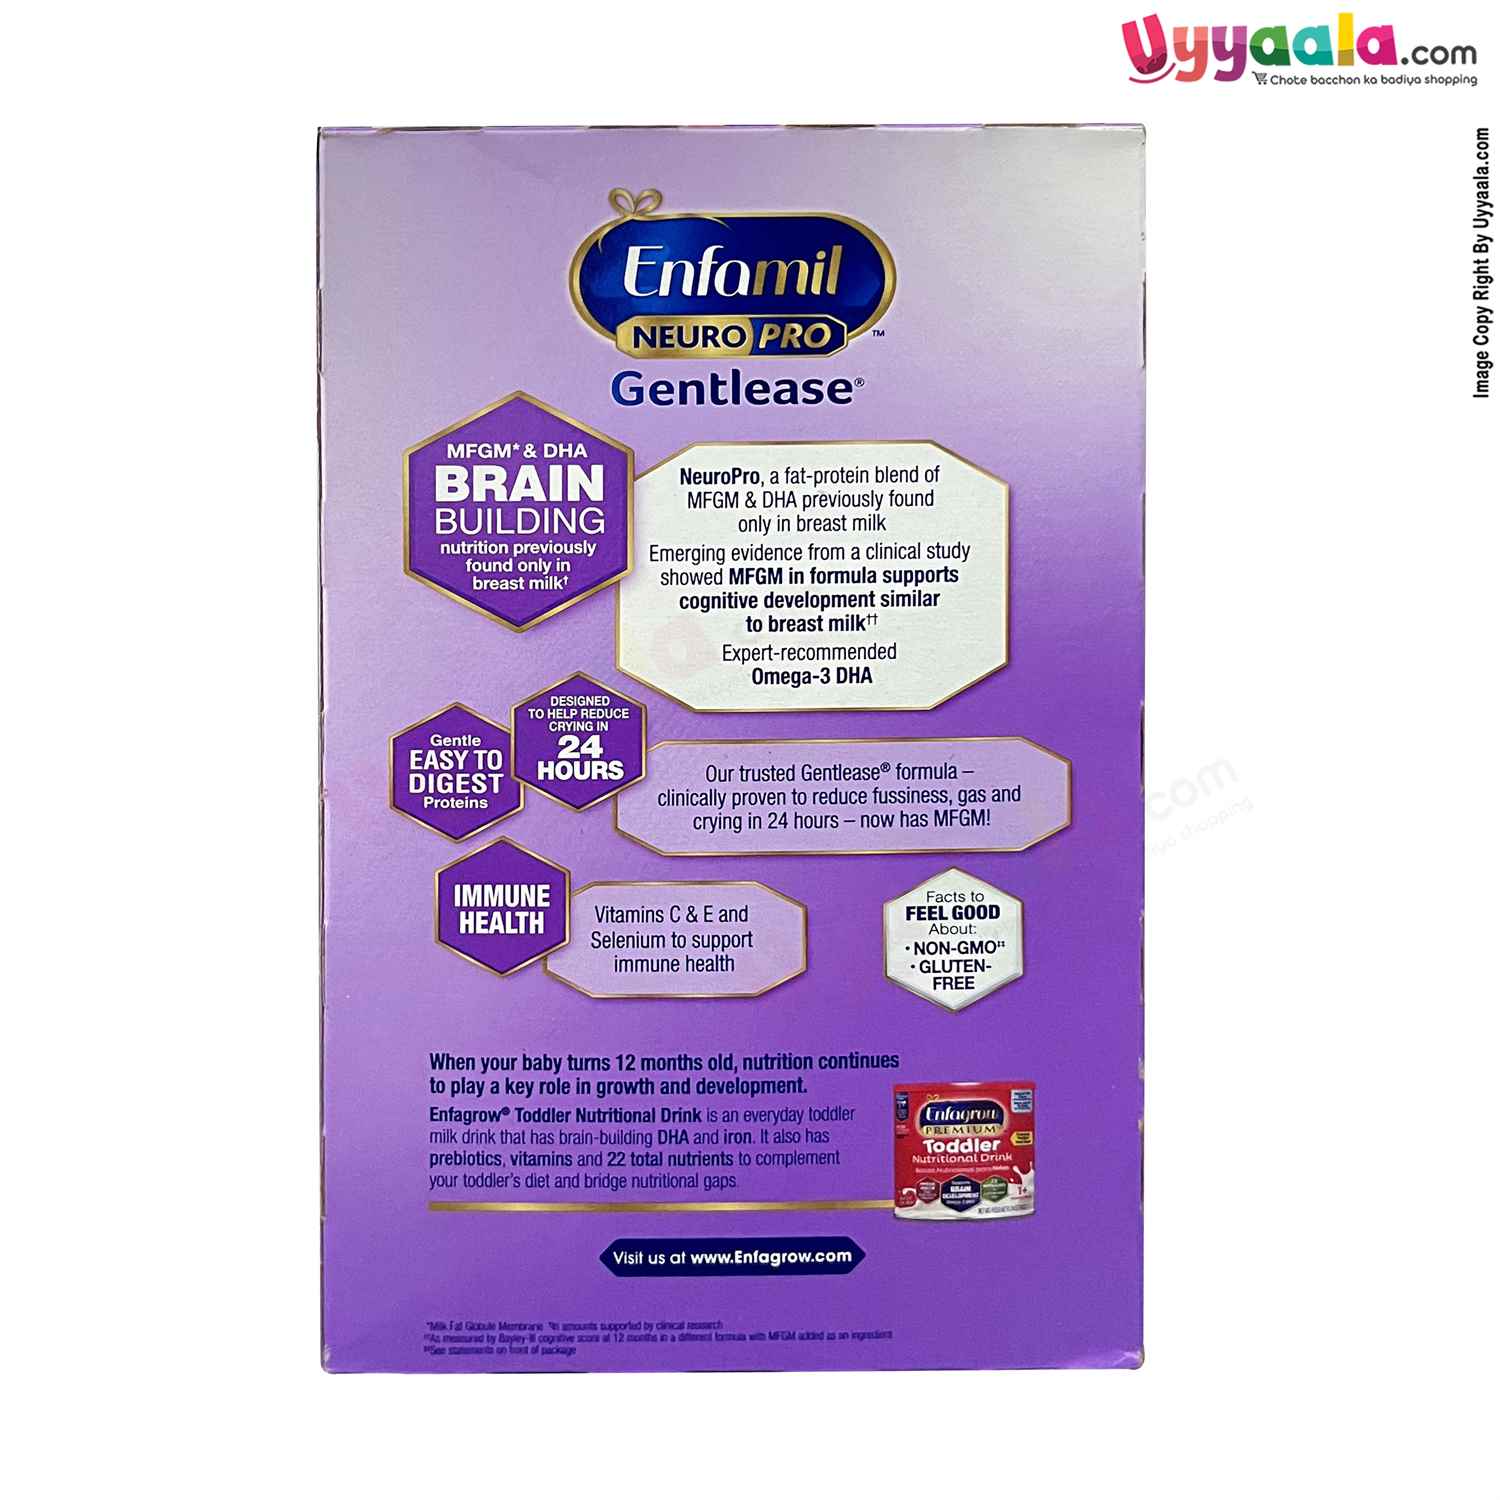 Buy Enfamil Neuro Pro Gentlease Infant Baby Milk Formula - 998gms (Refill Pack) Online in India at uyyaala.com